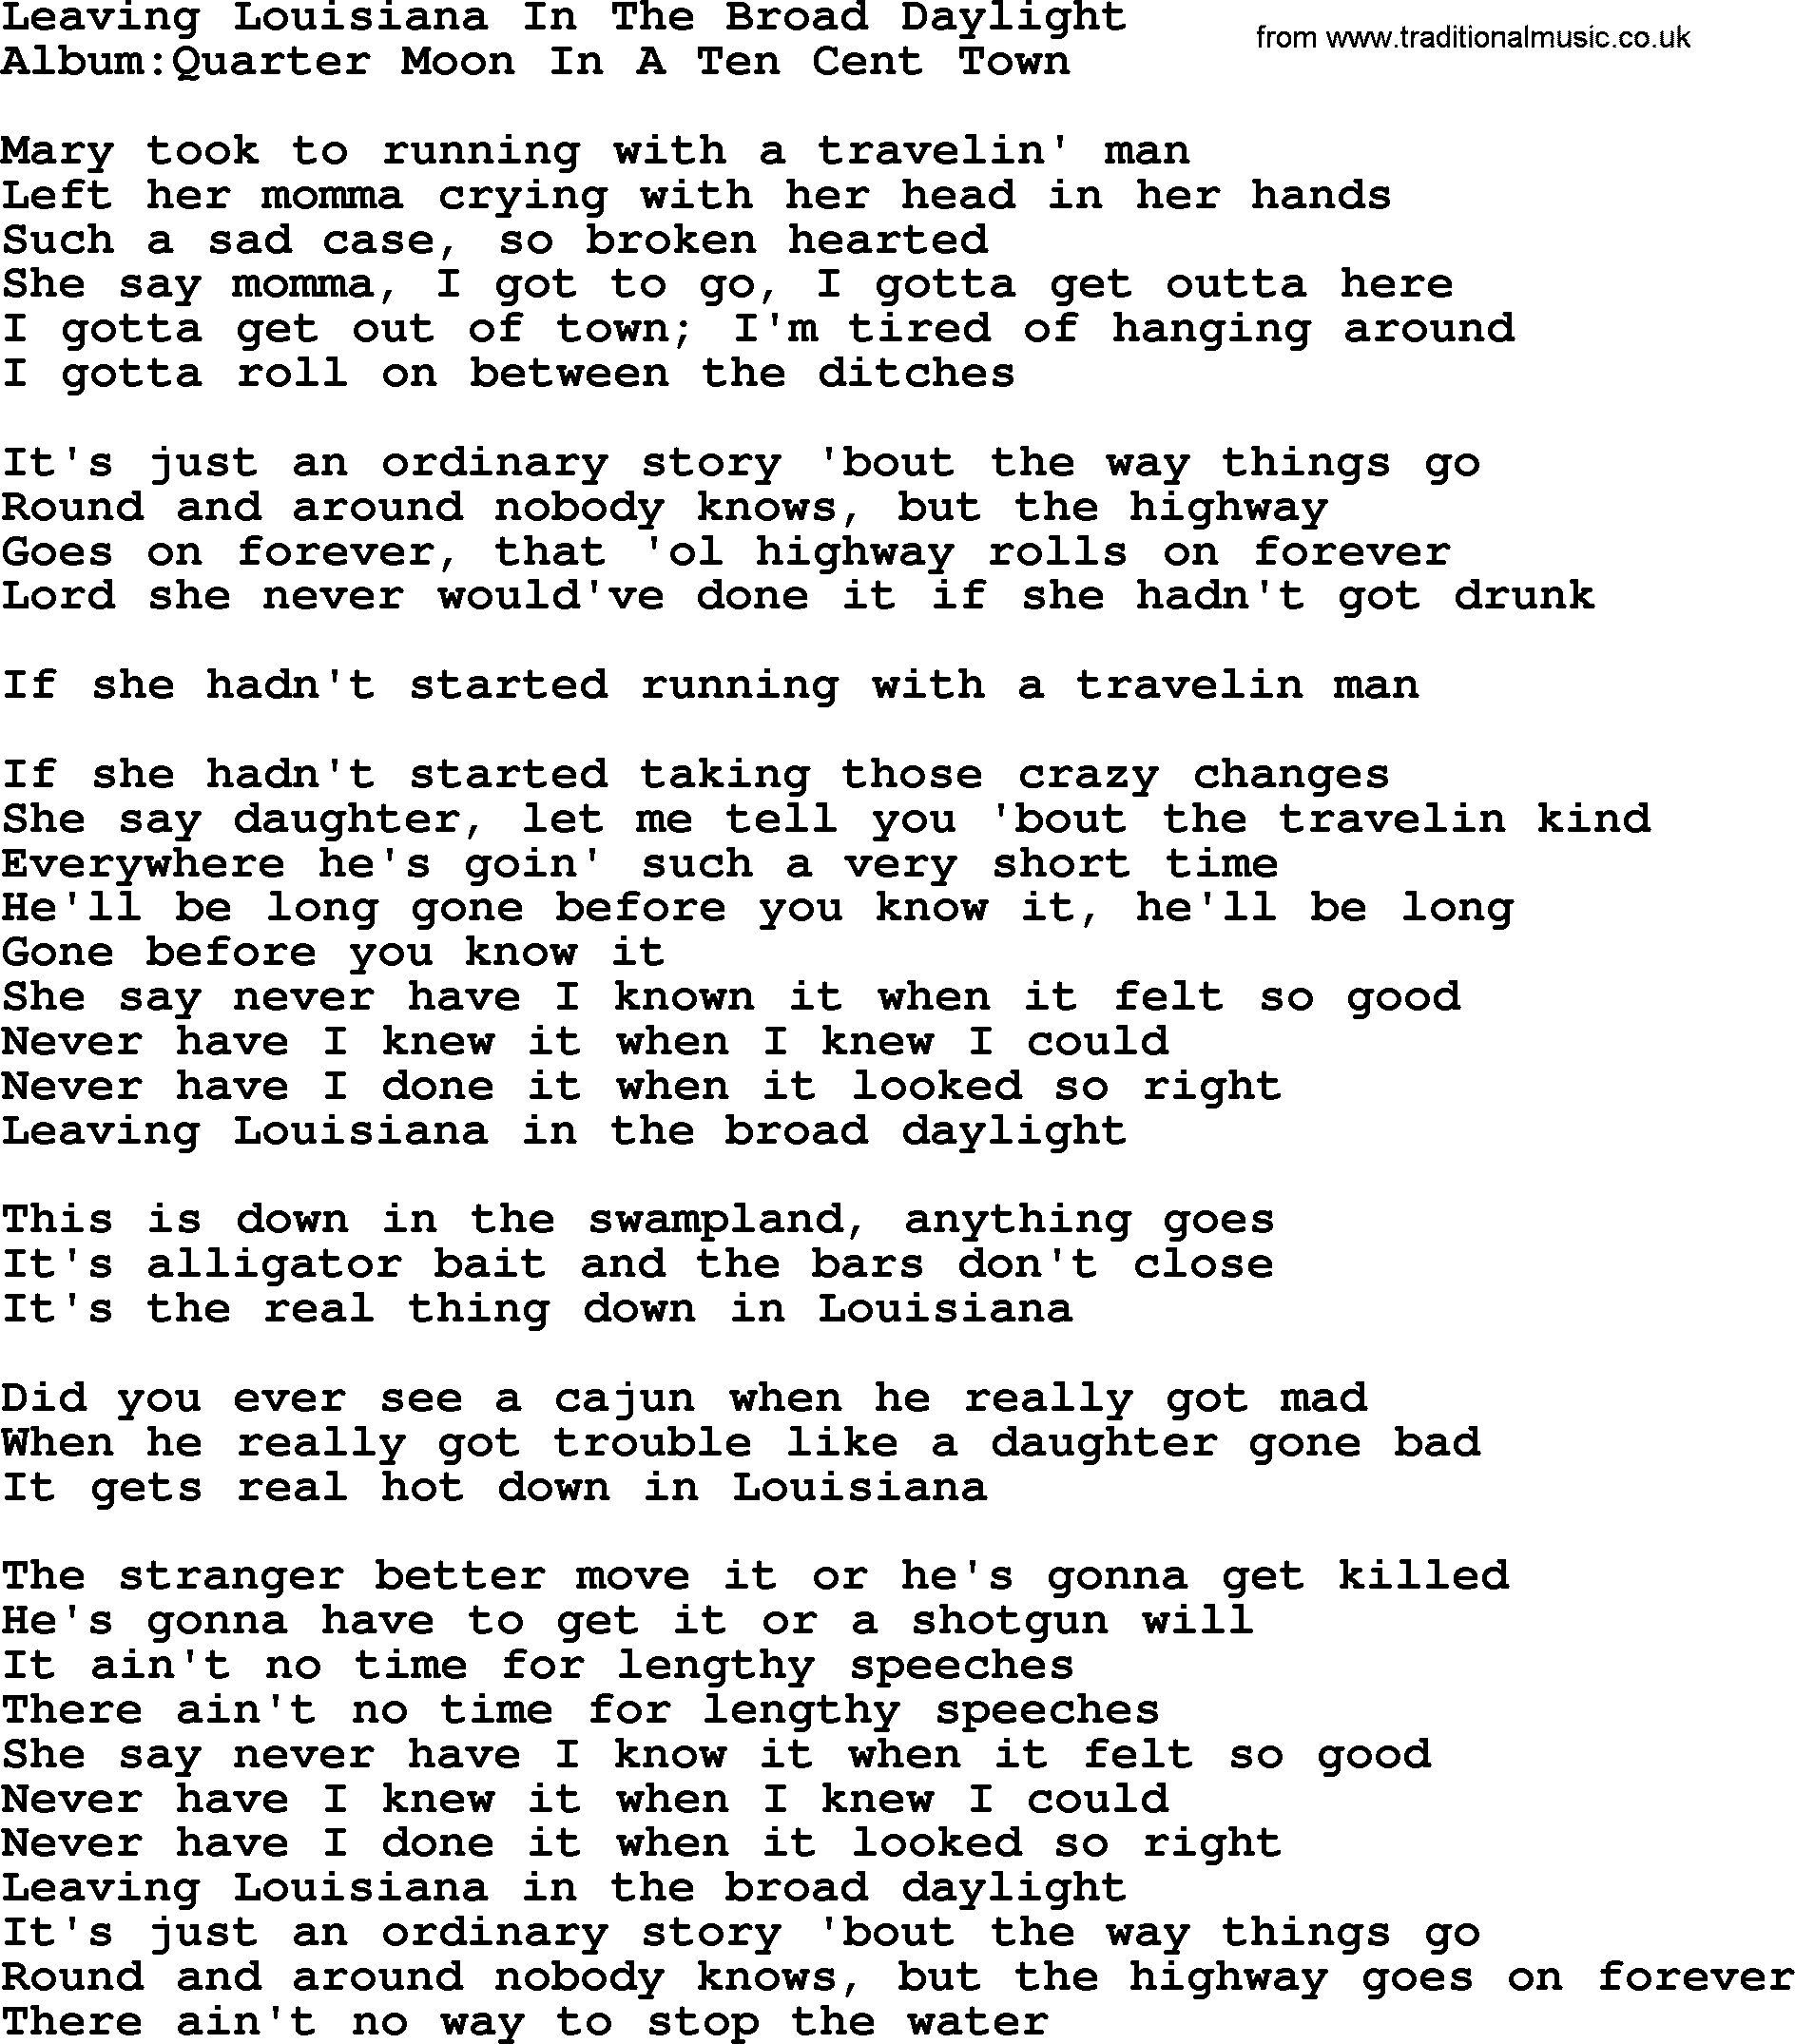 Emmylou Harris song: Leaving Louisiana In The Broad Daylight lyrics